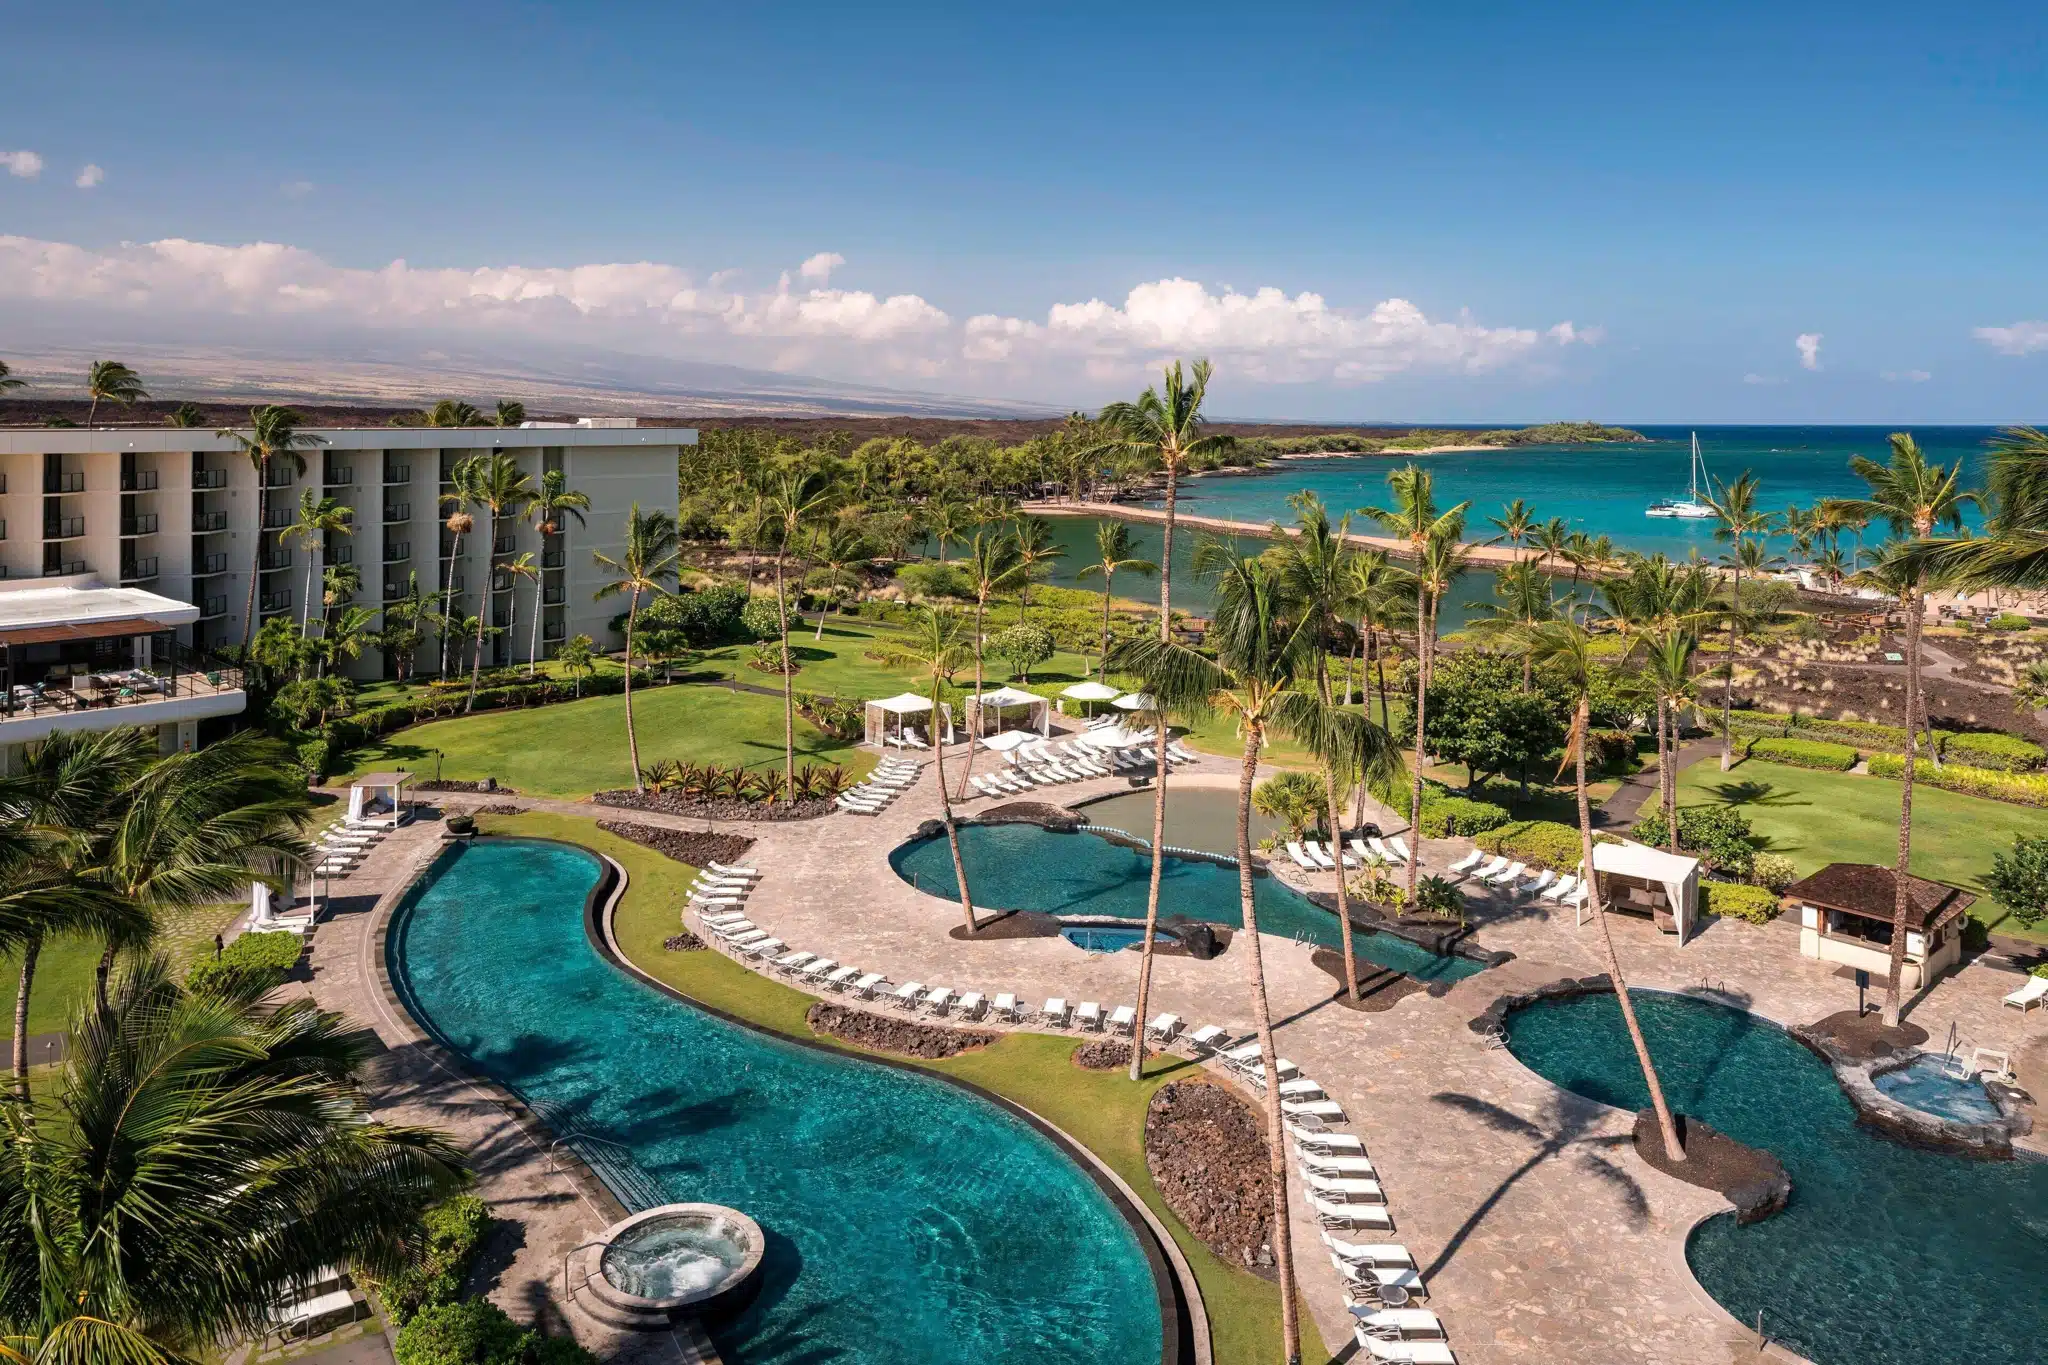 Waikoloa Beach Marriott Resort & Spa is a Hotel located in the city of Waikoloa on Big Island, Hawaii